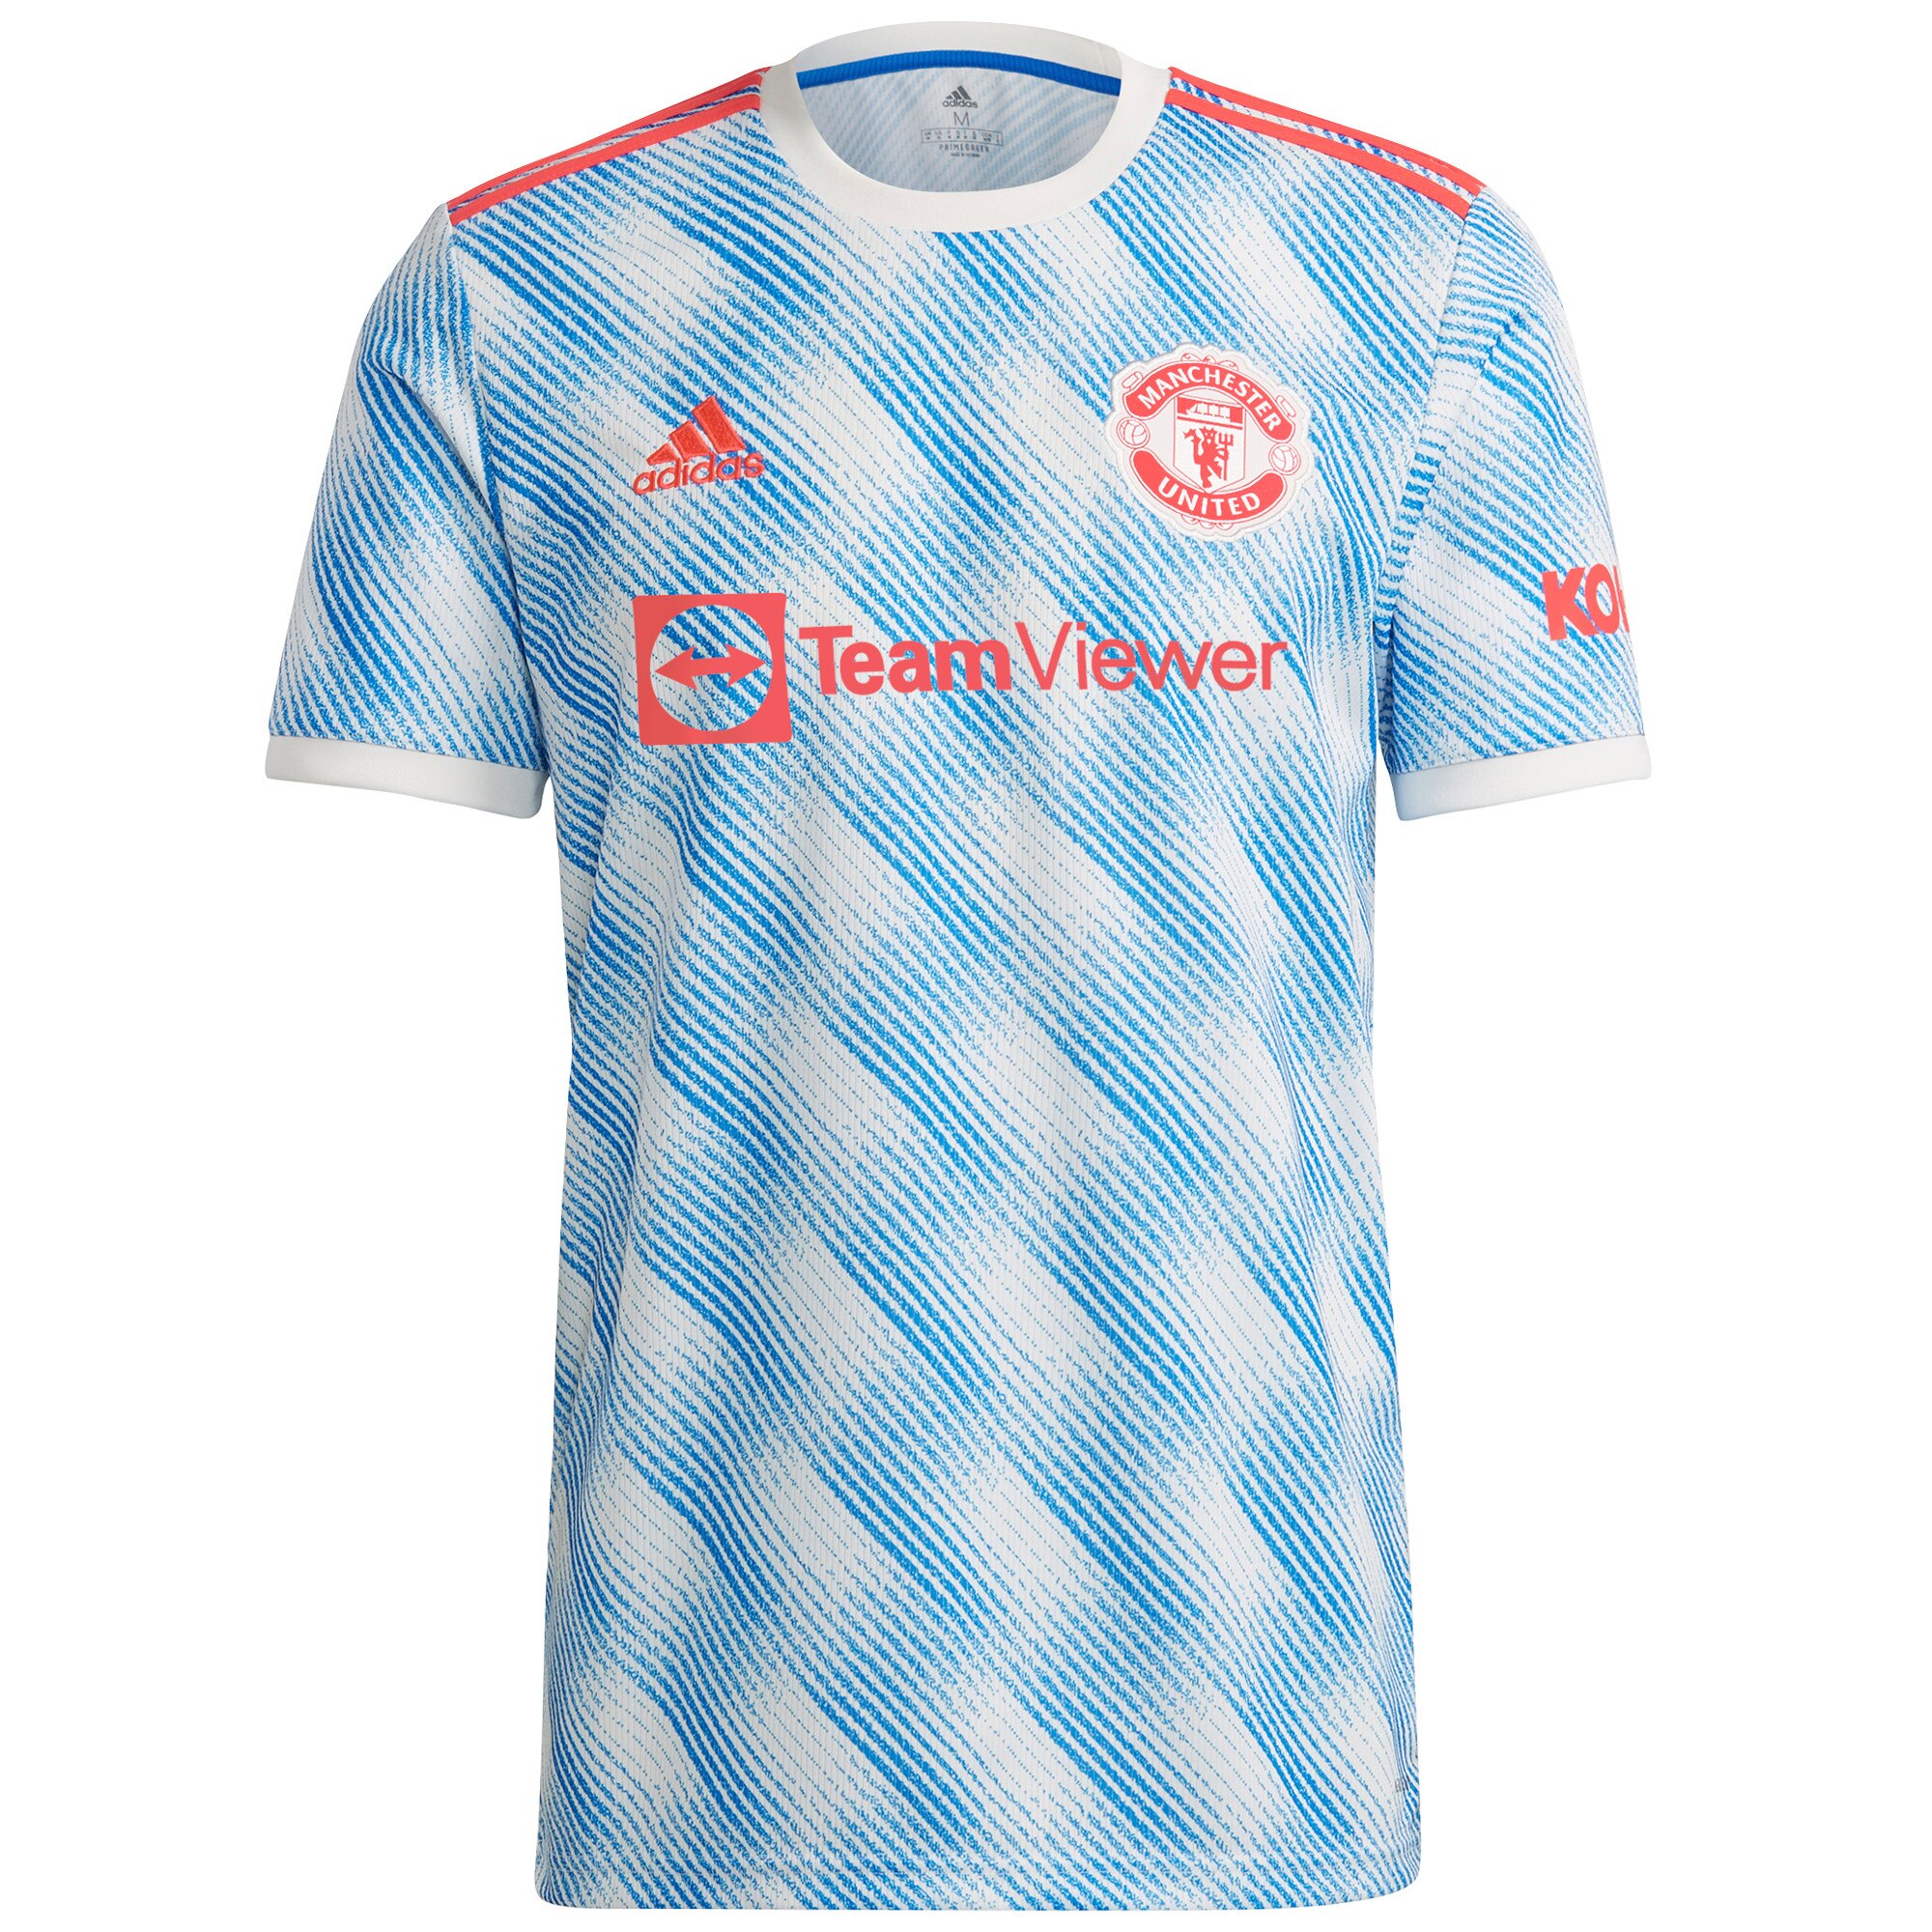 Manchester United Away Shirt 2021-22 with Wan-Bissaka 29 printing